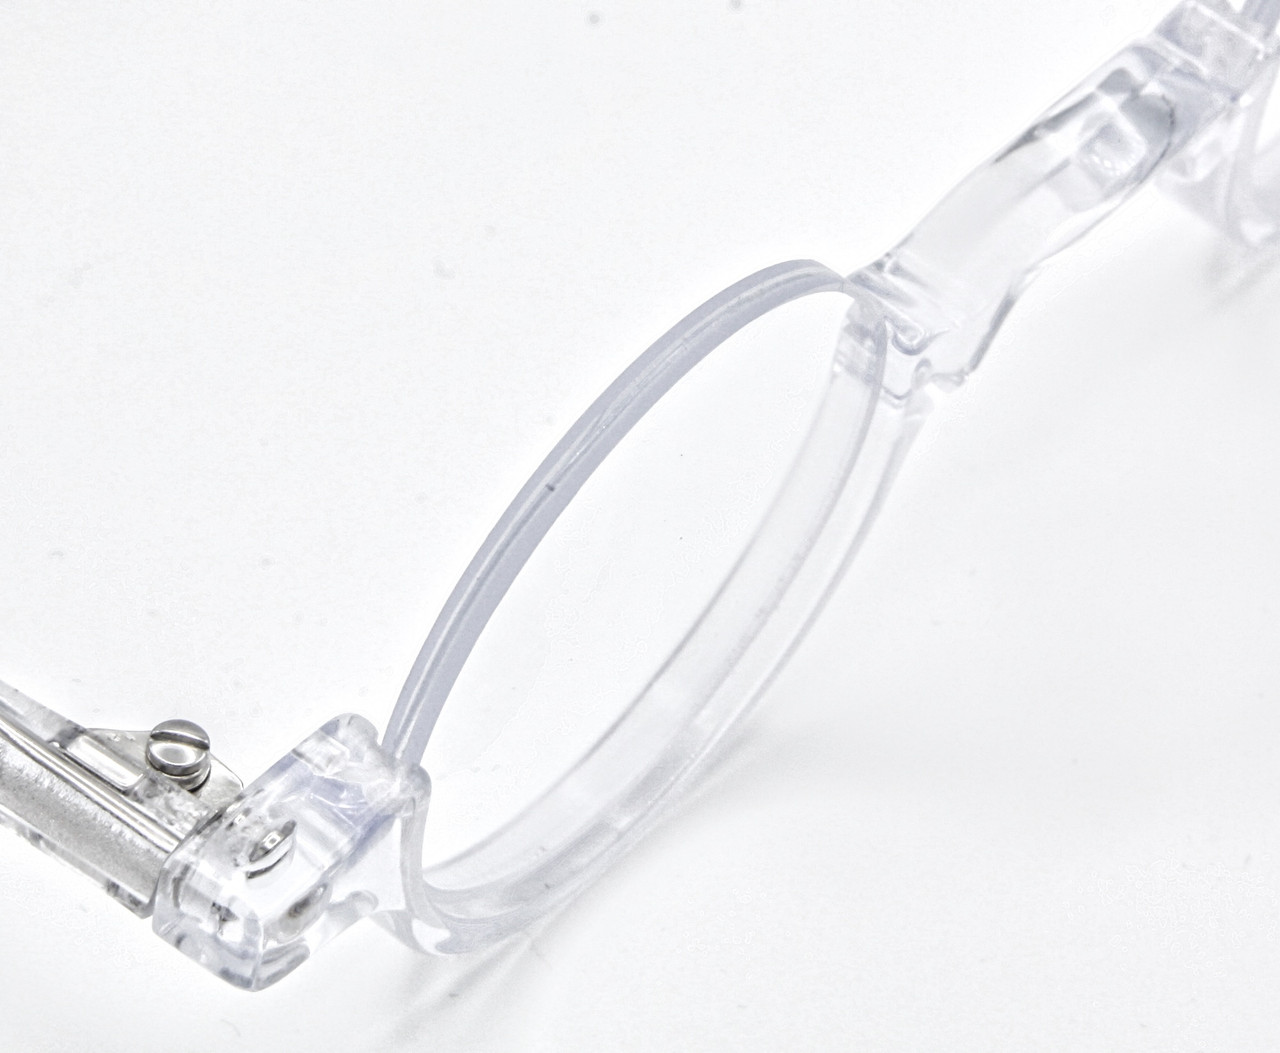 Crystal Clear Acetate Schnuchel 3604 Hand made Lower Half Rim Eyeglasses 34mm Eye Size